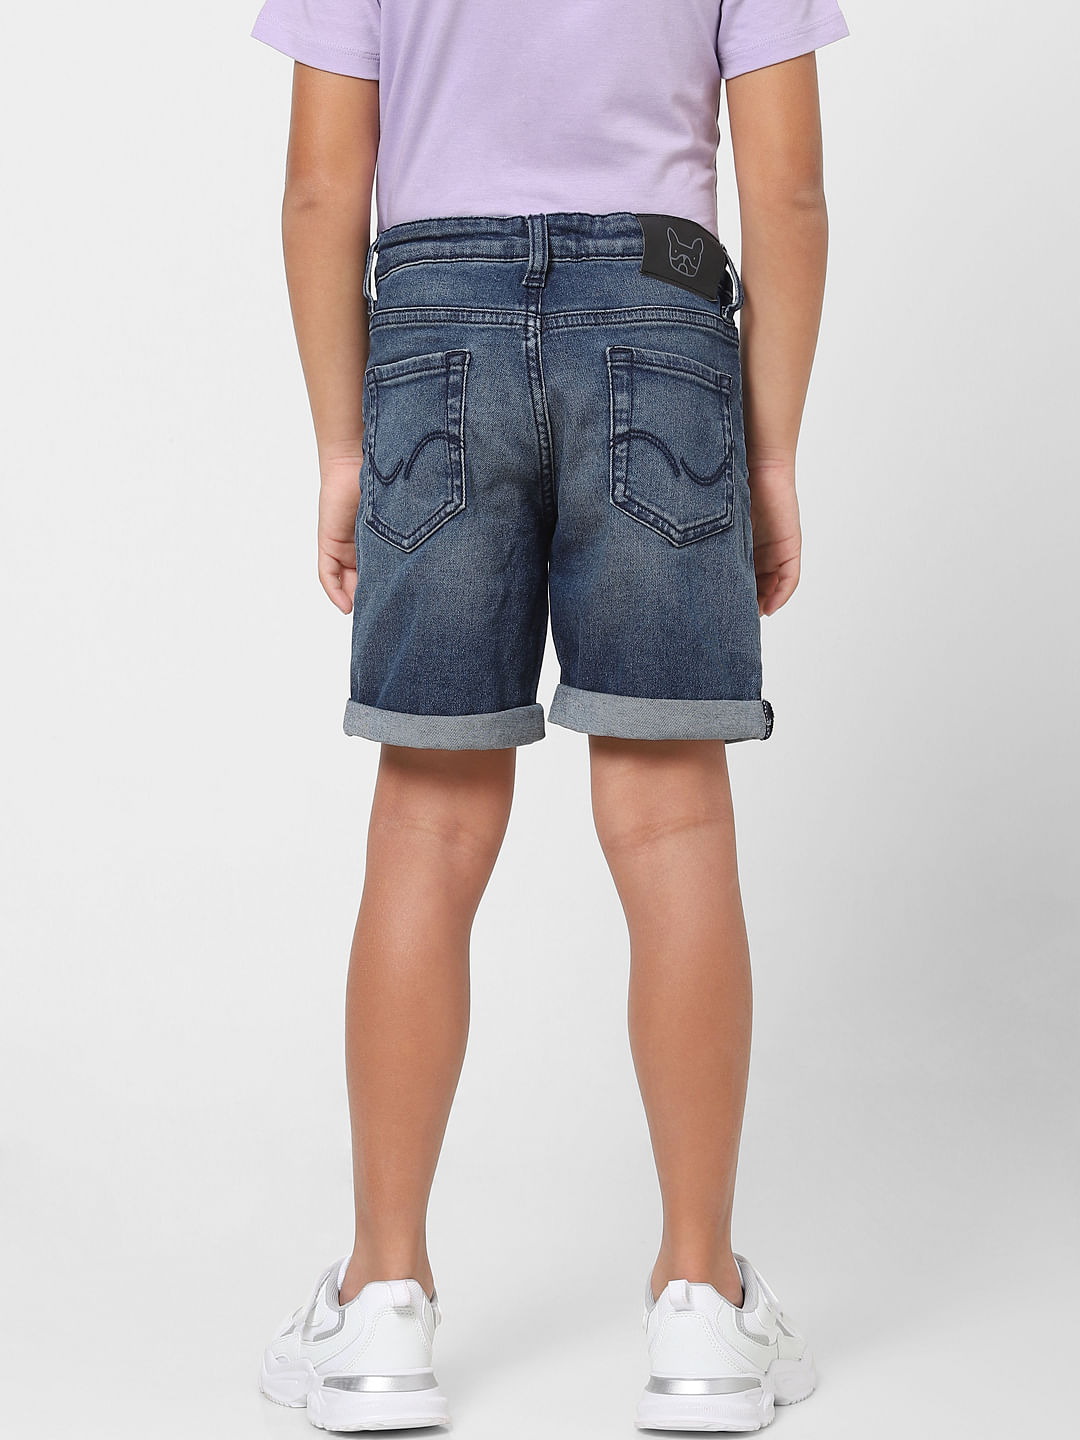 Buy U.S. Polo Assn. Kids Boys Blue Slim Fit Distressed Denim Shorts -  NNNOW.com